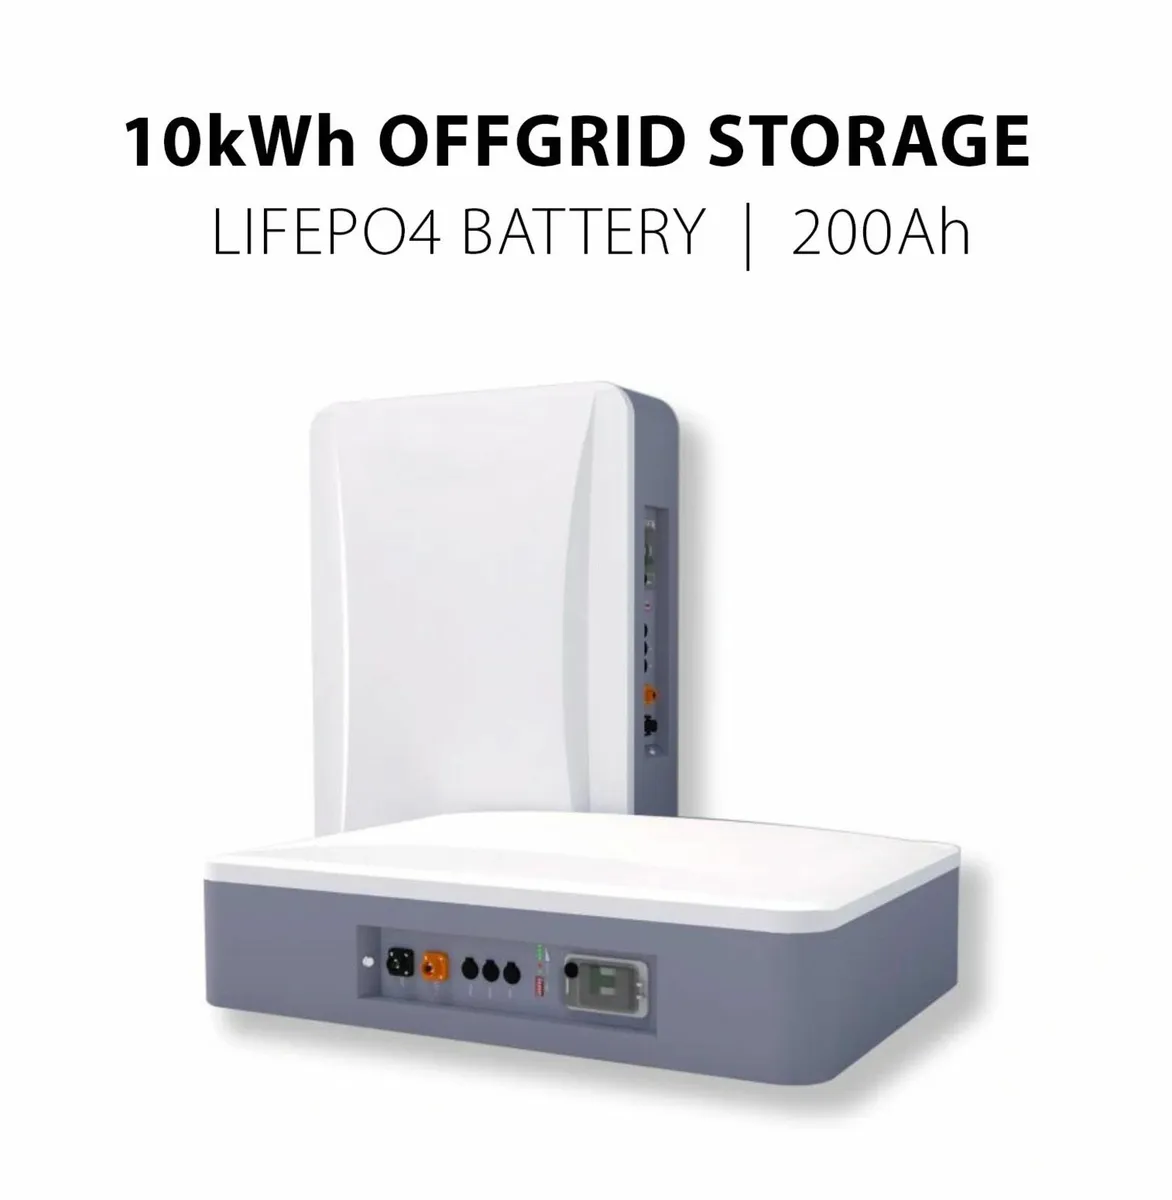 Solar Batteries 10kWh Storage - Image 1